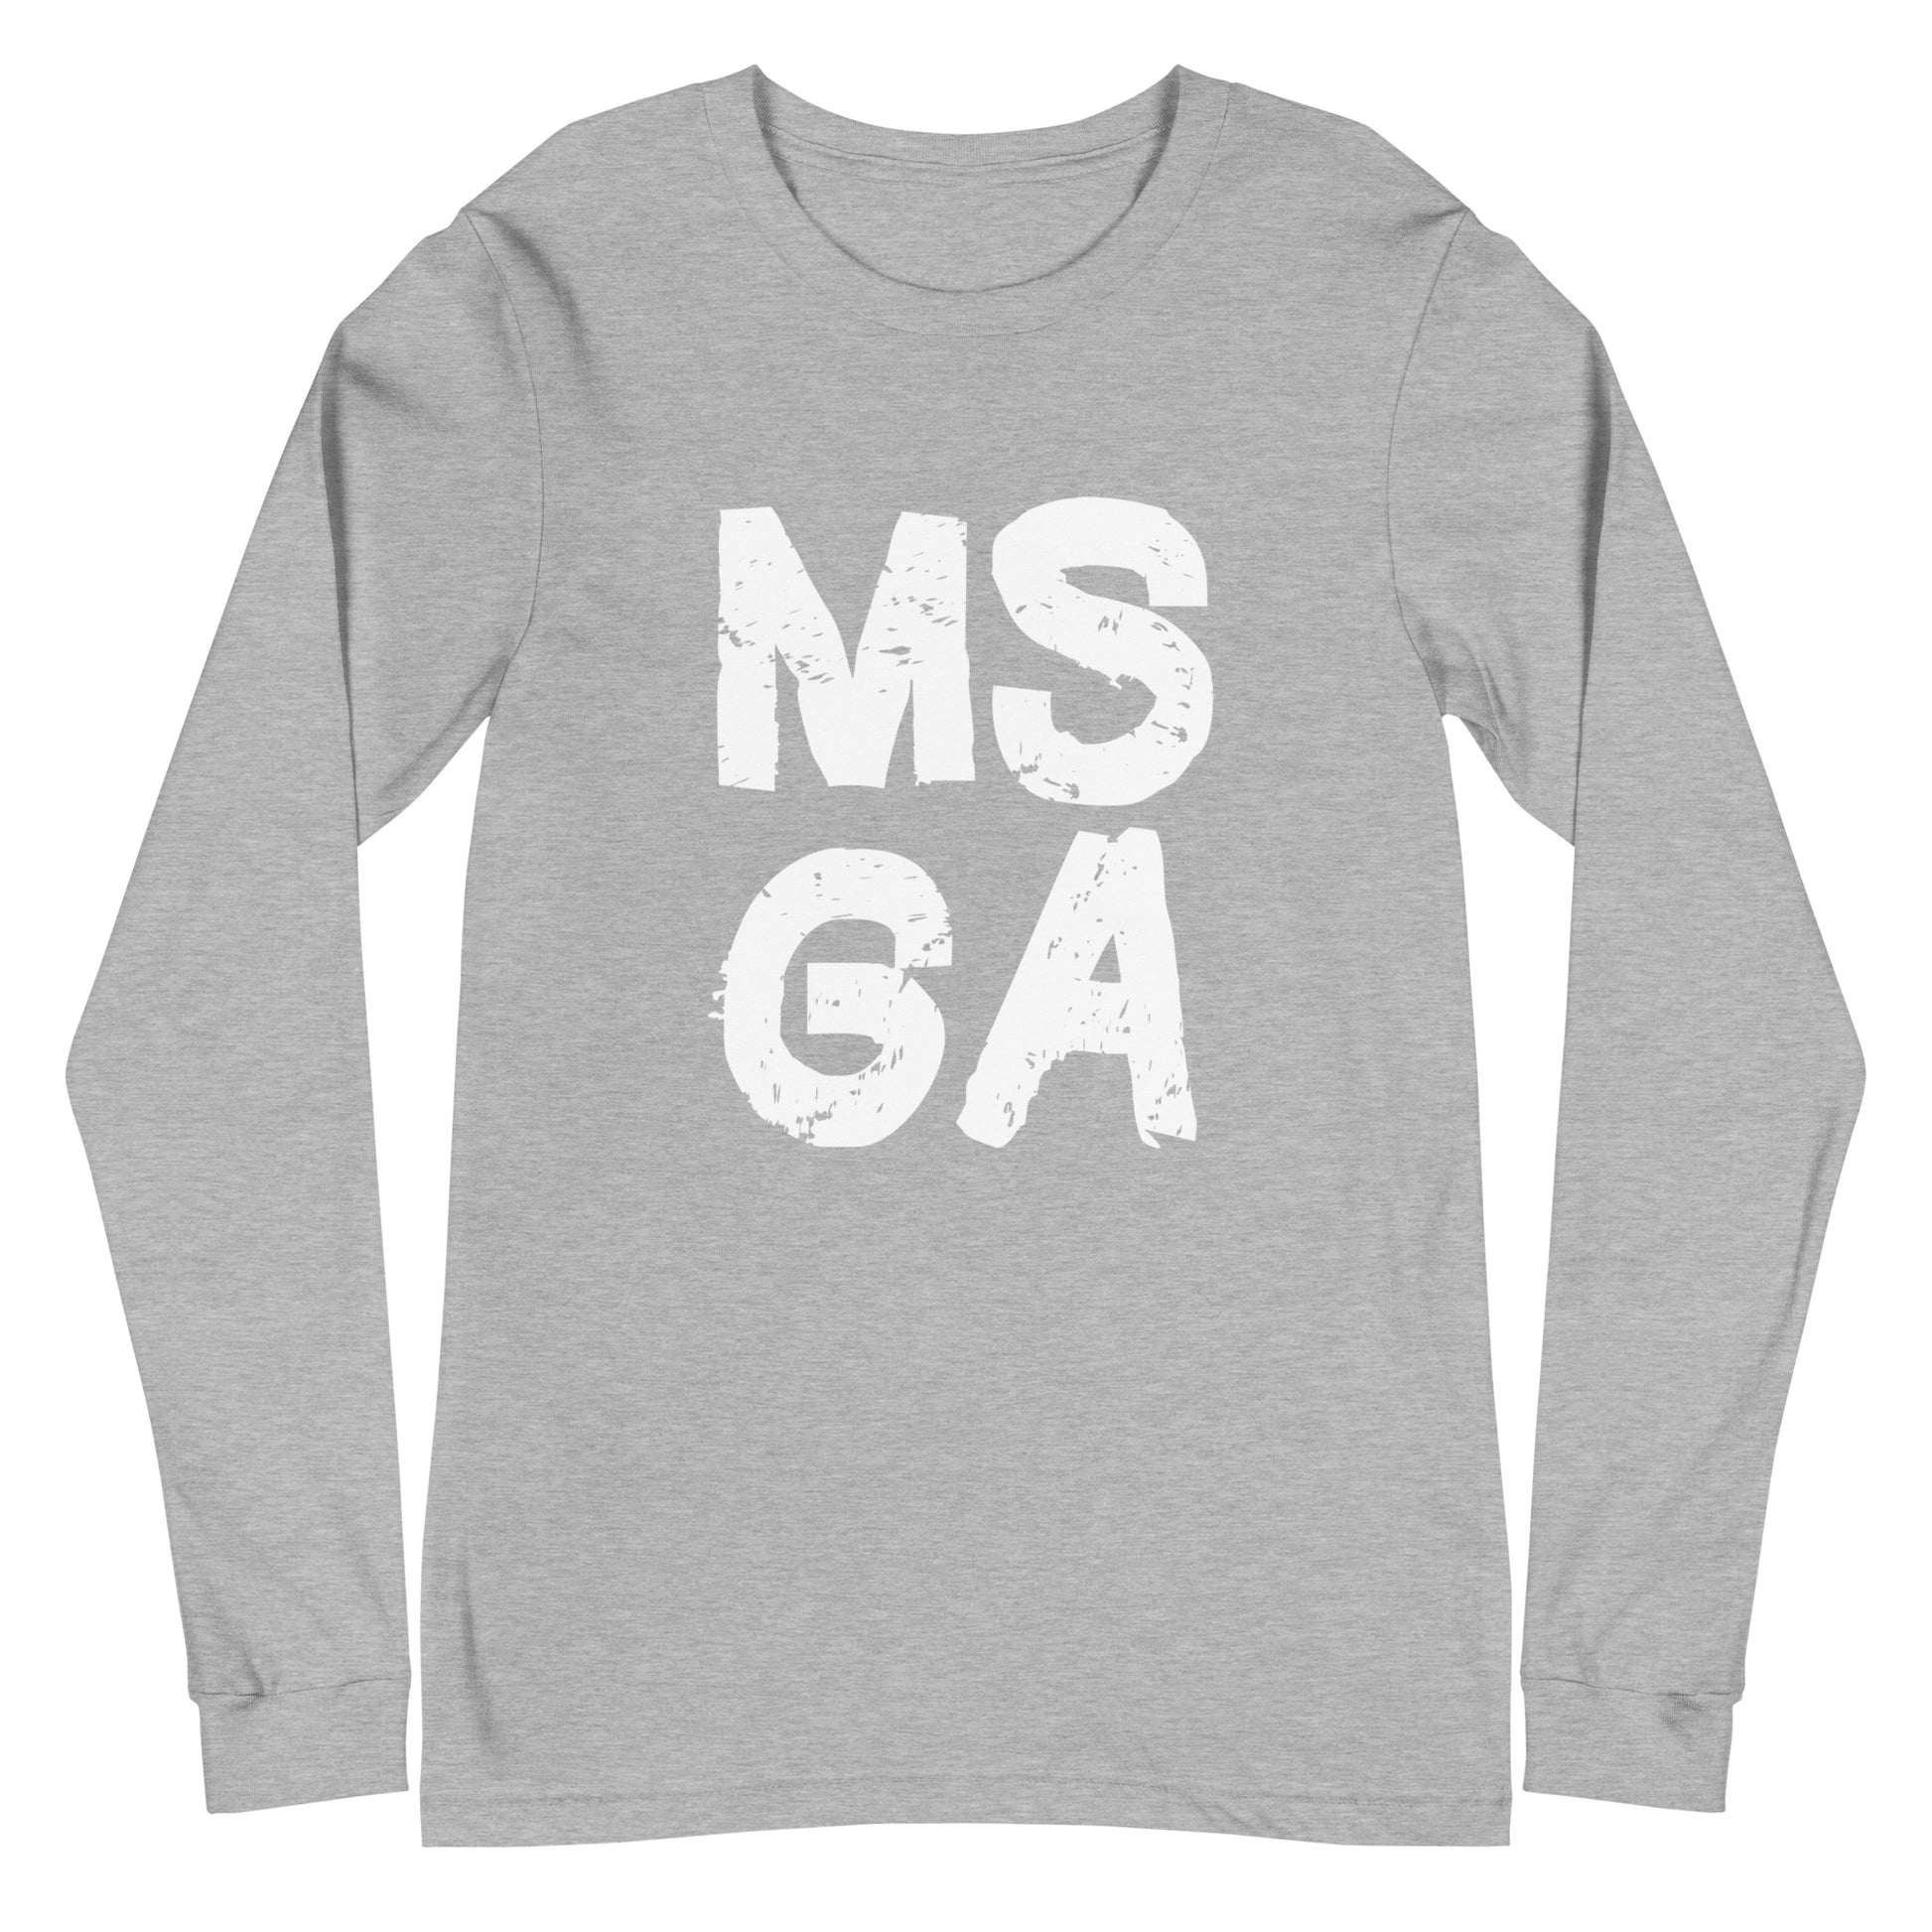 MSGA Surveillance Camera Long Sleeve T-shirt - Make Snitching Great Again